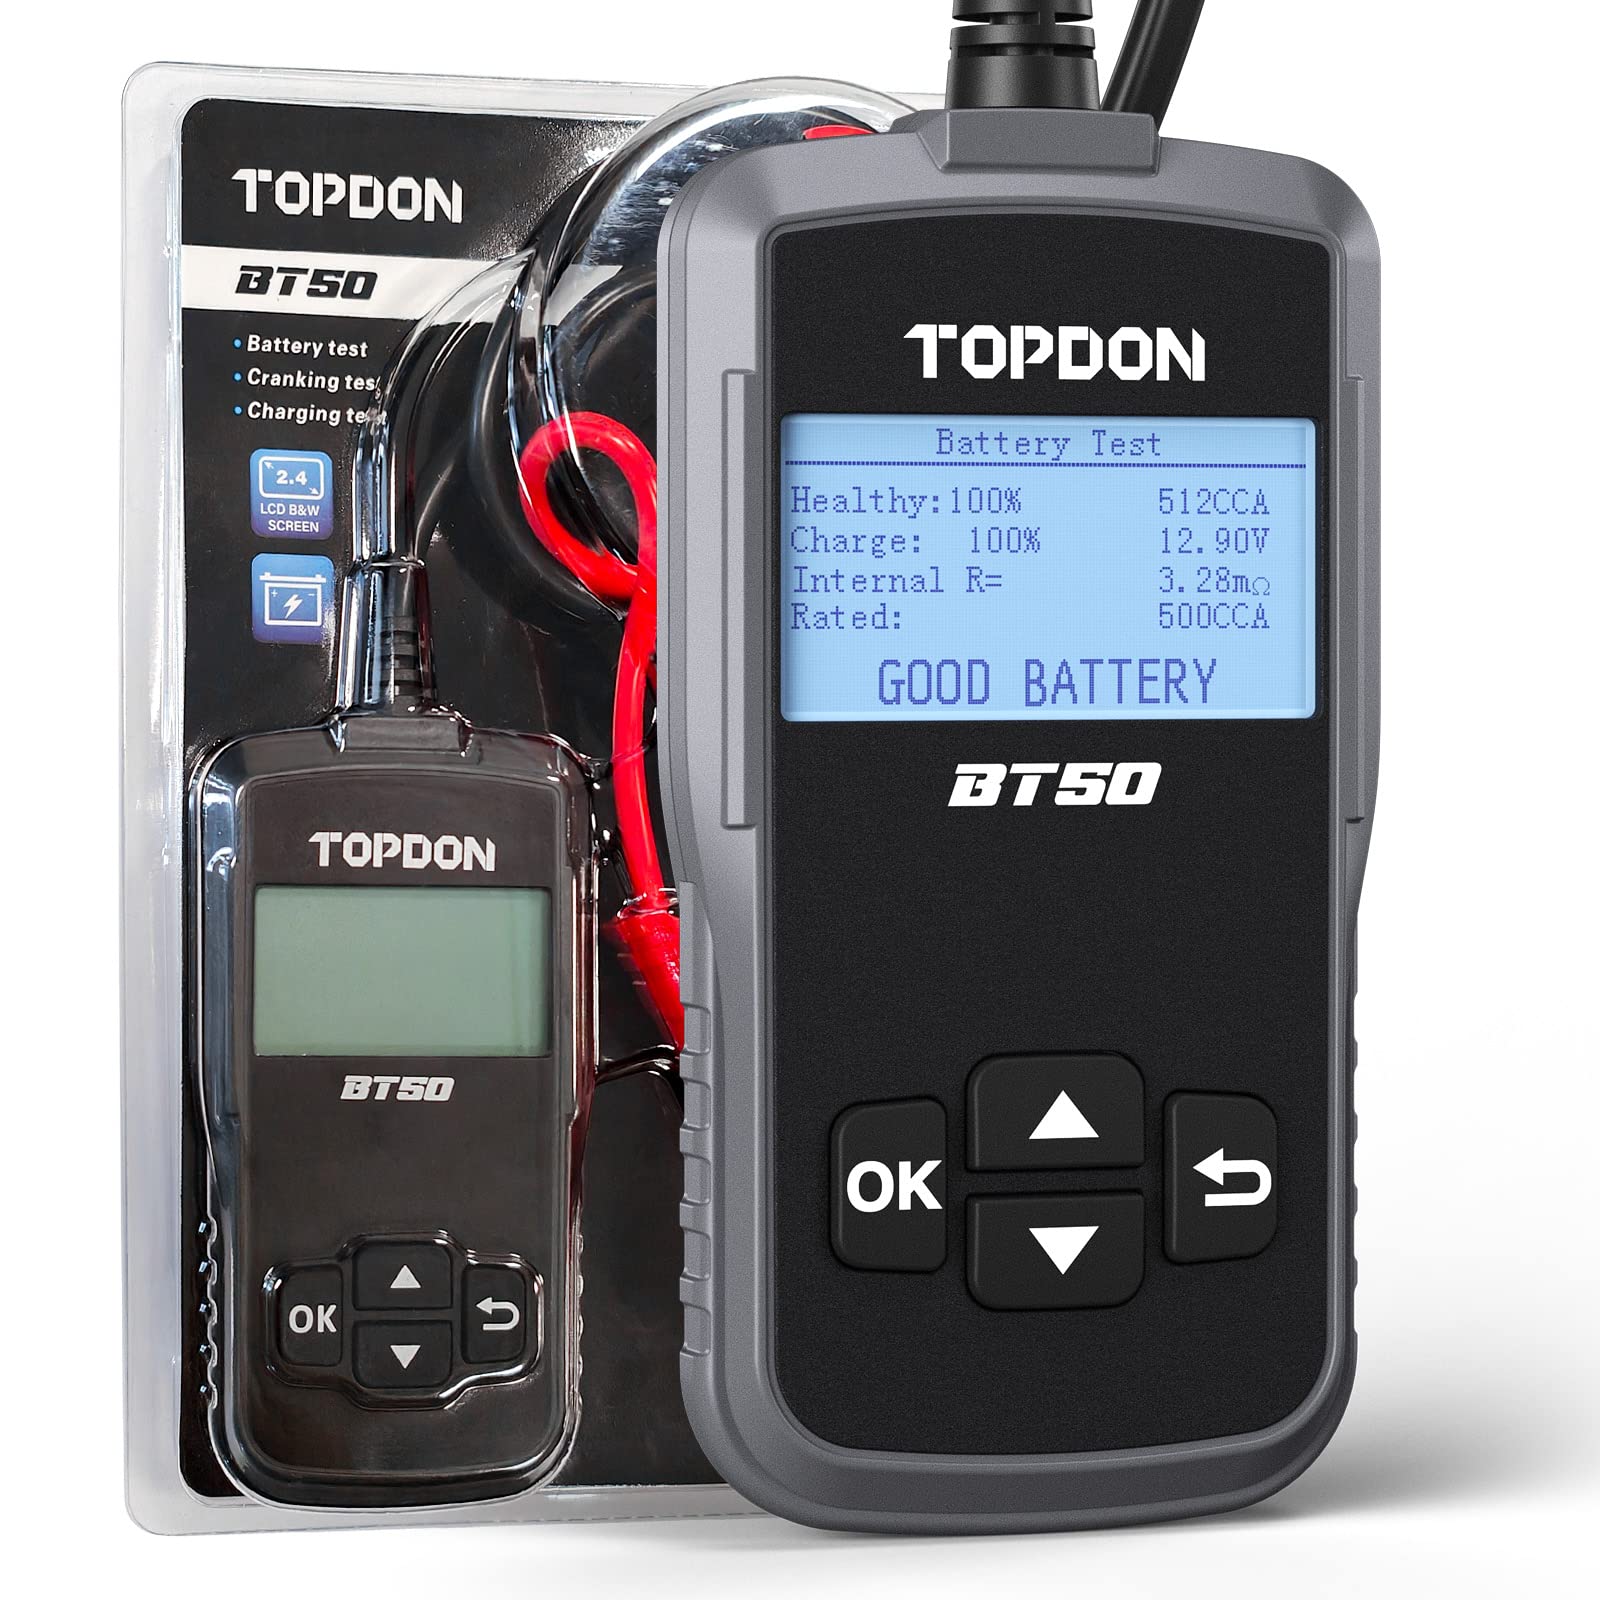 Autobatterie Tester TOPDON BT50, 12V Batterietester kfz 100-2000CCA Digitaler Autobatterieanalysator Ladekurbelsystemtester für Auto Motorrad SUV LKW Boot von TOPDON